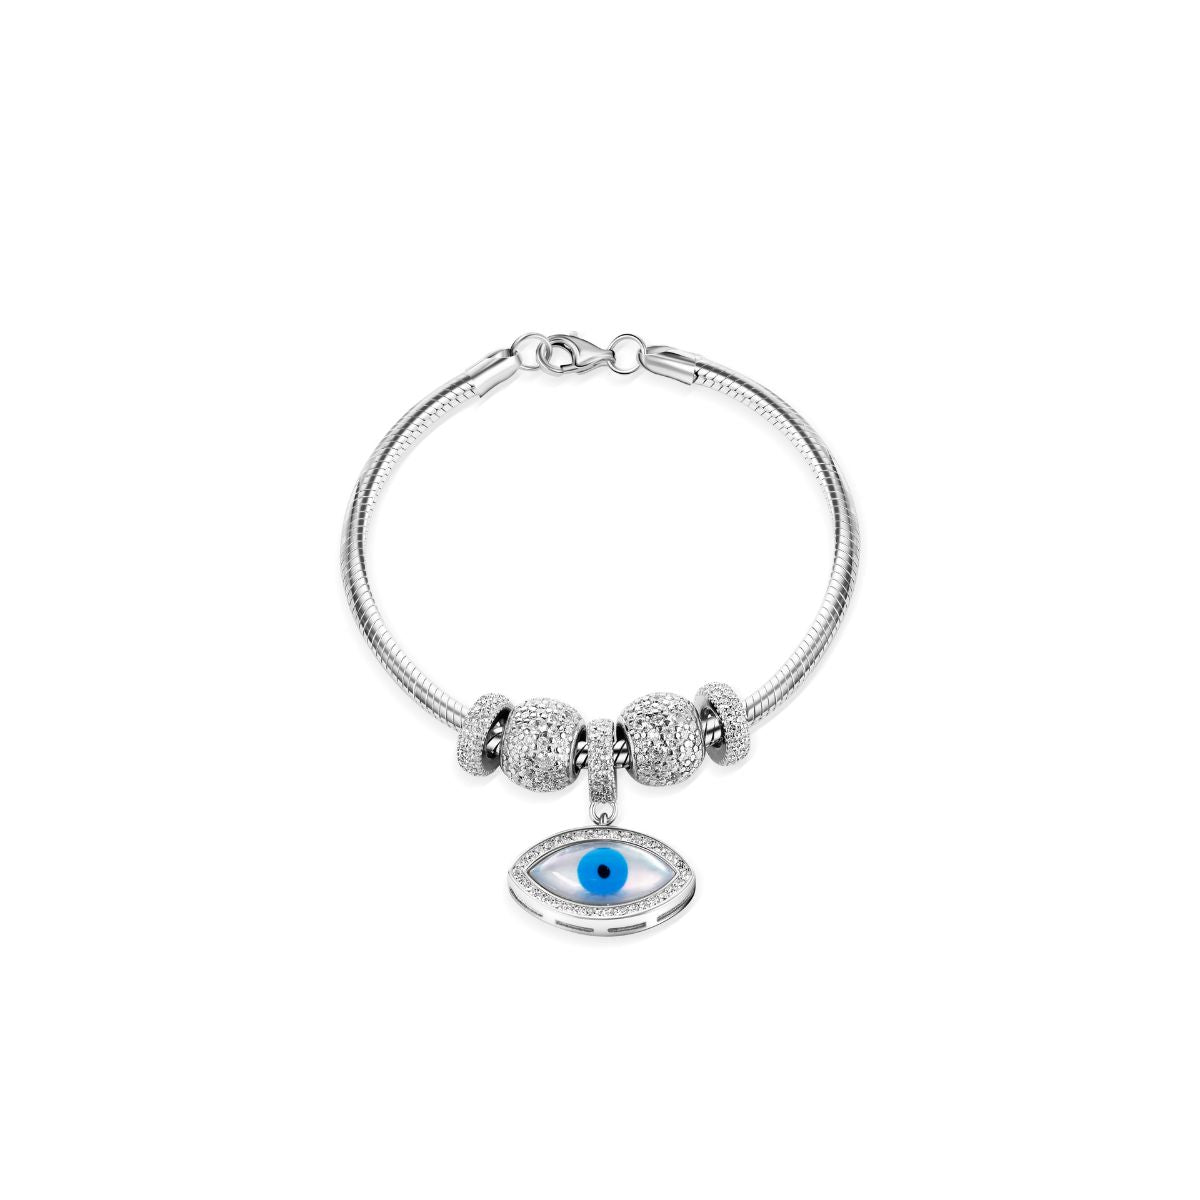 Silver Eye Bracelet